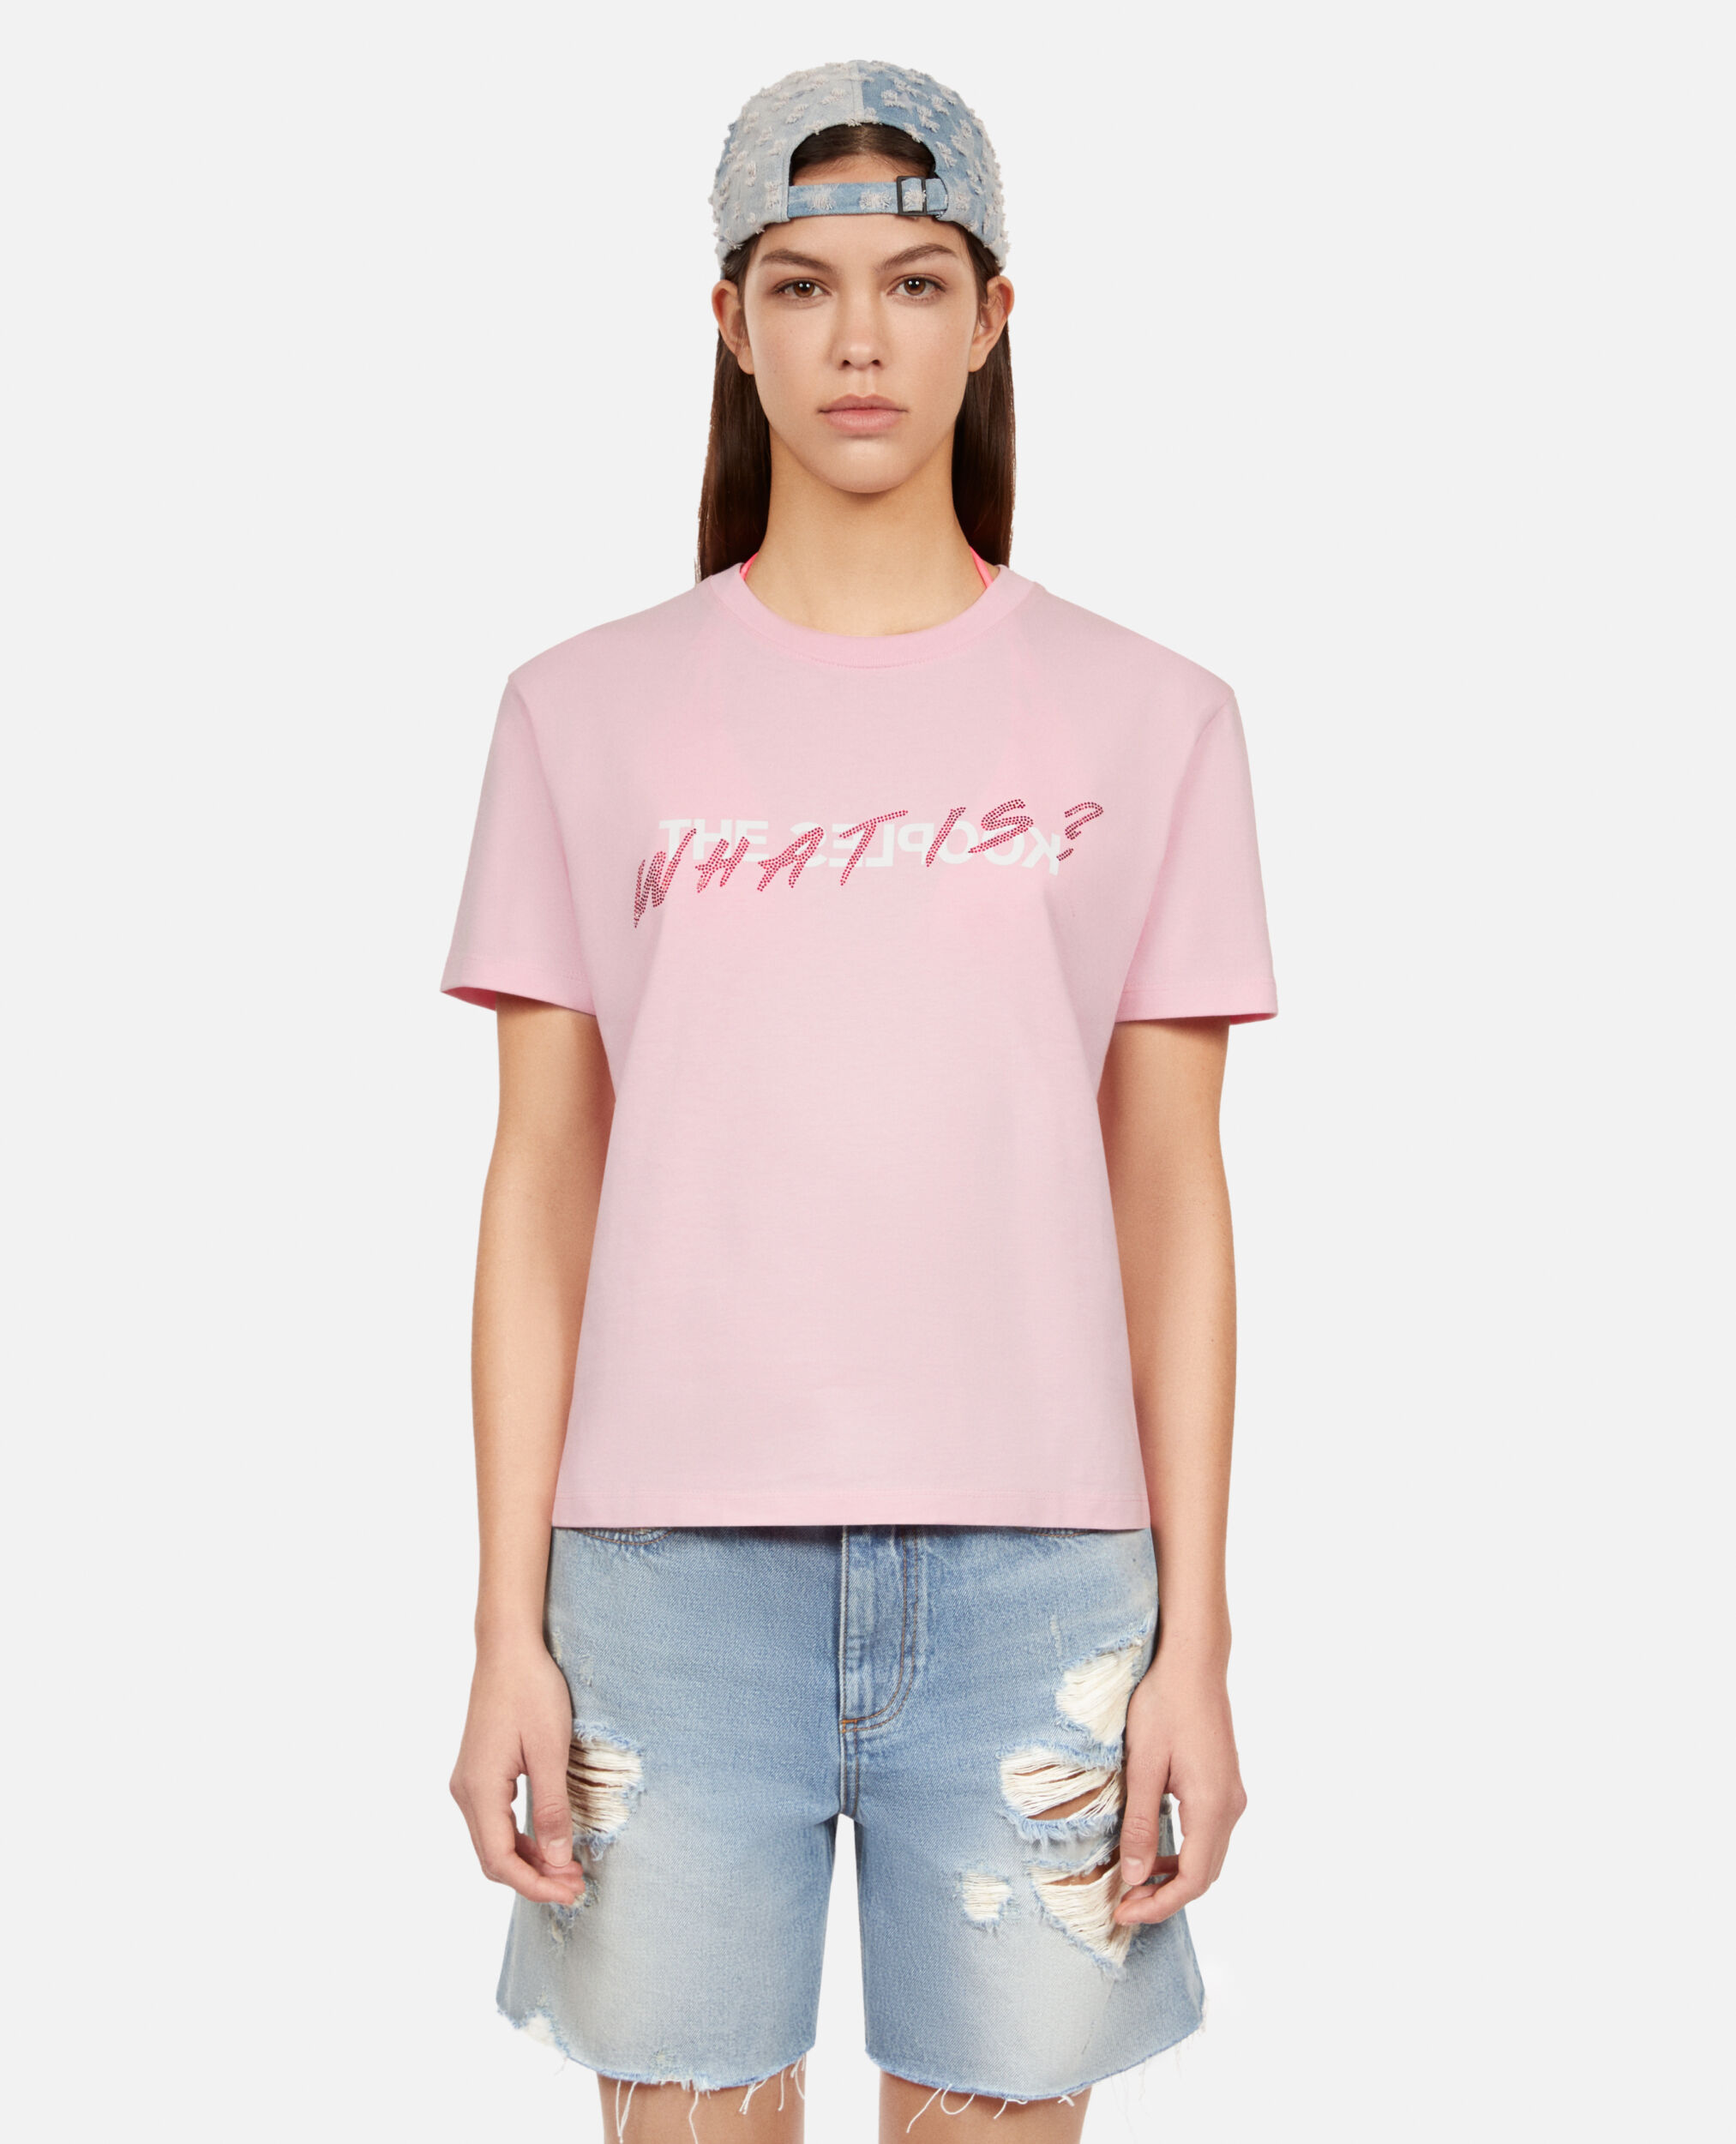 Rosa T-Shirt „What is“ mit Strassbesatz, POWDER PINK, hi-res image number null